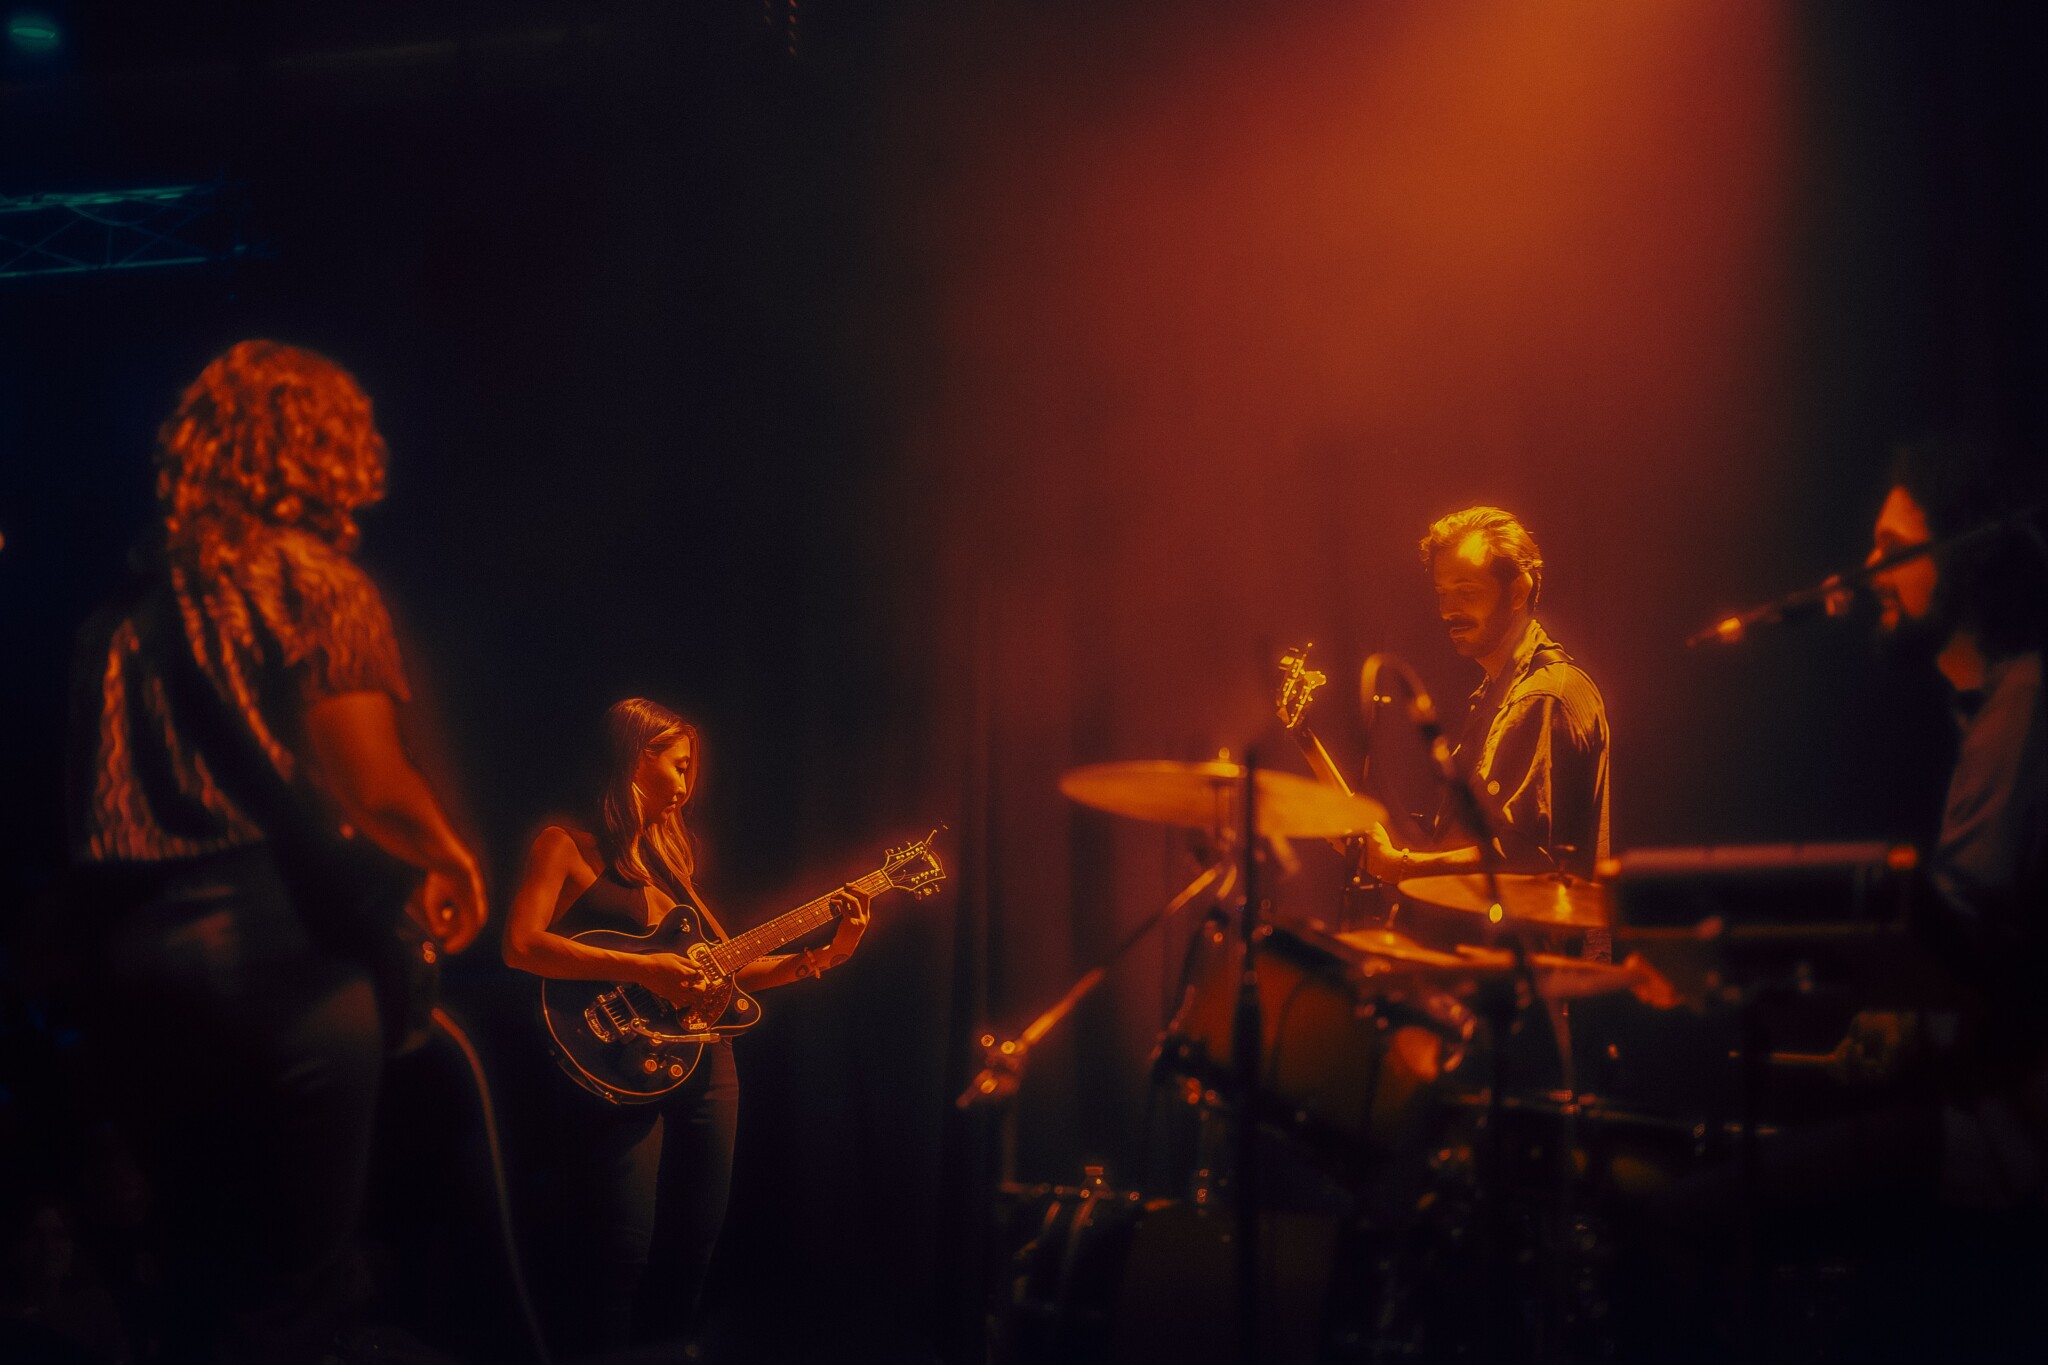 A folk rock band performs on stage under orange lighting.